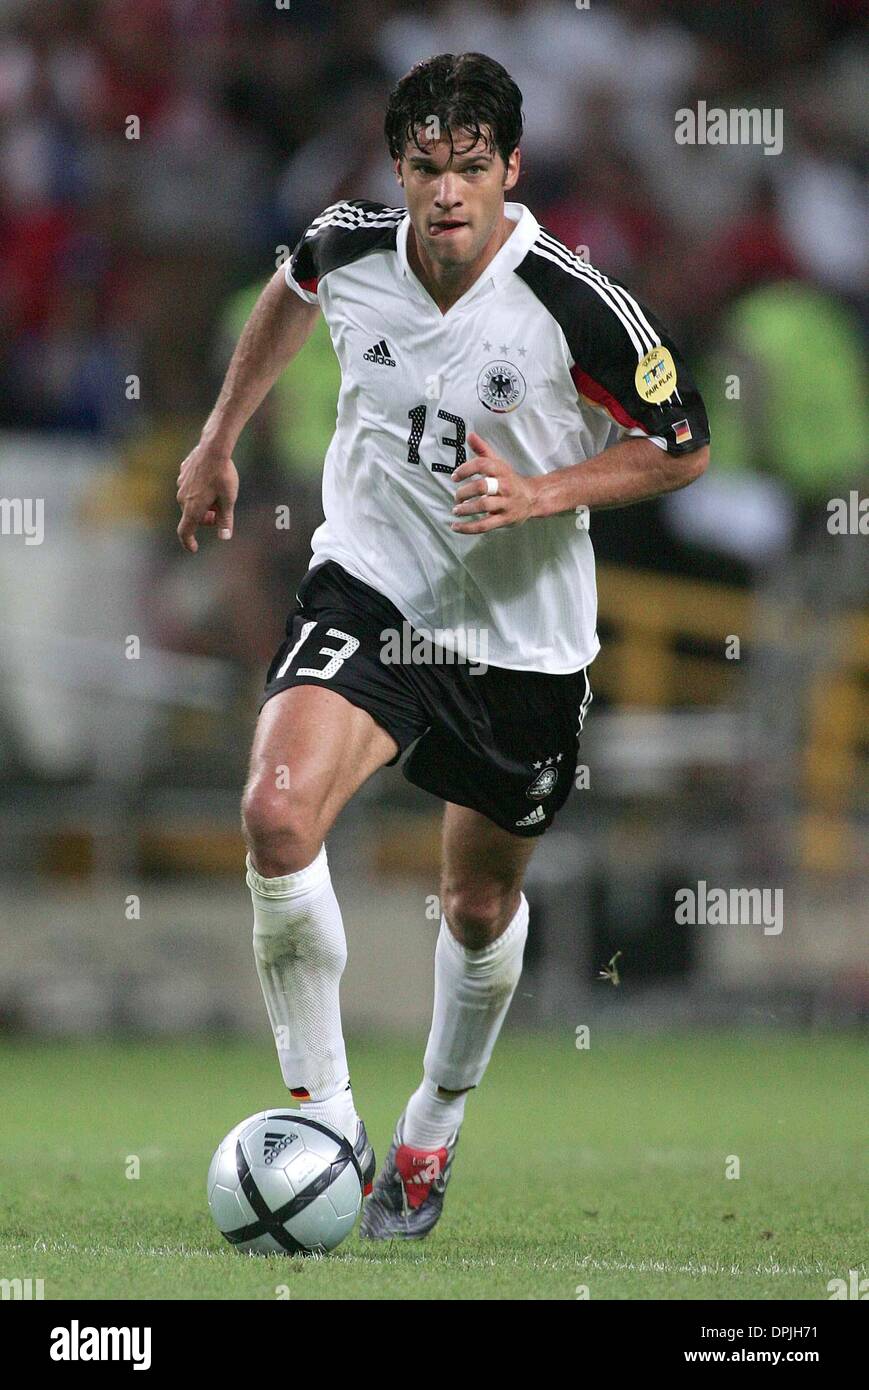 MICHAEL BALLACK.GERMANY & BAYERN MUNICH FC.GERMANY V CZECH REPUBLIC EURO.JOSE ALVALADE STADIUM, LISBON, PORTUGAL.23/06/2004.DIG25243.K47872.WORLD CUP PREVIEW 2006 Stock Photo